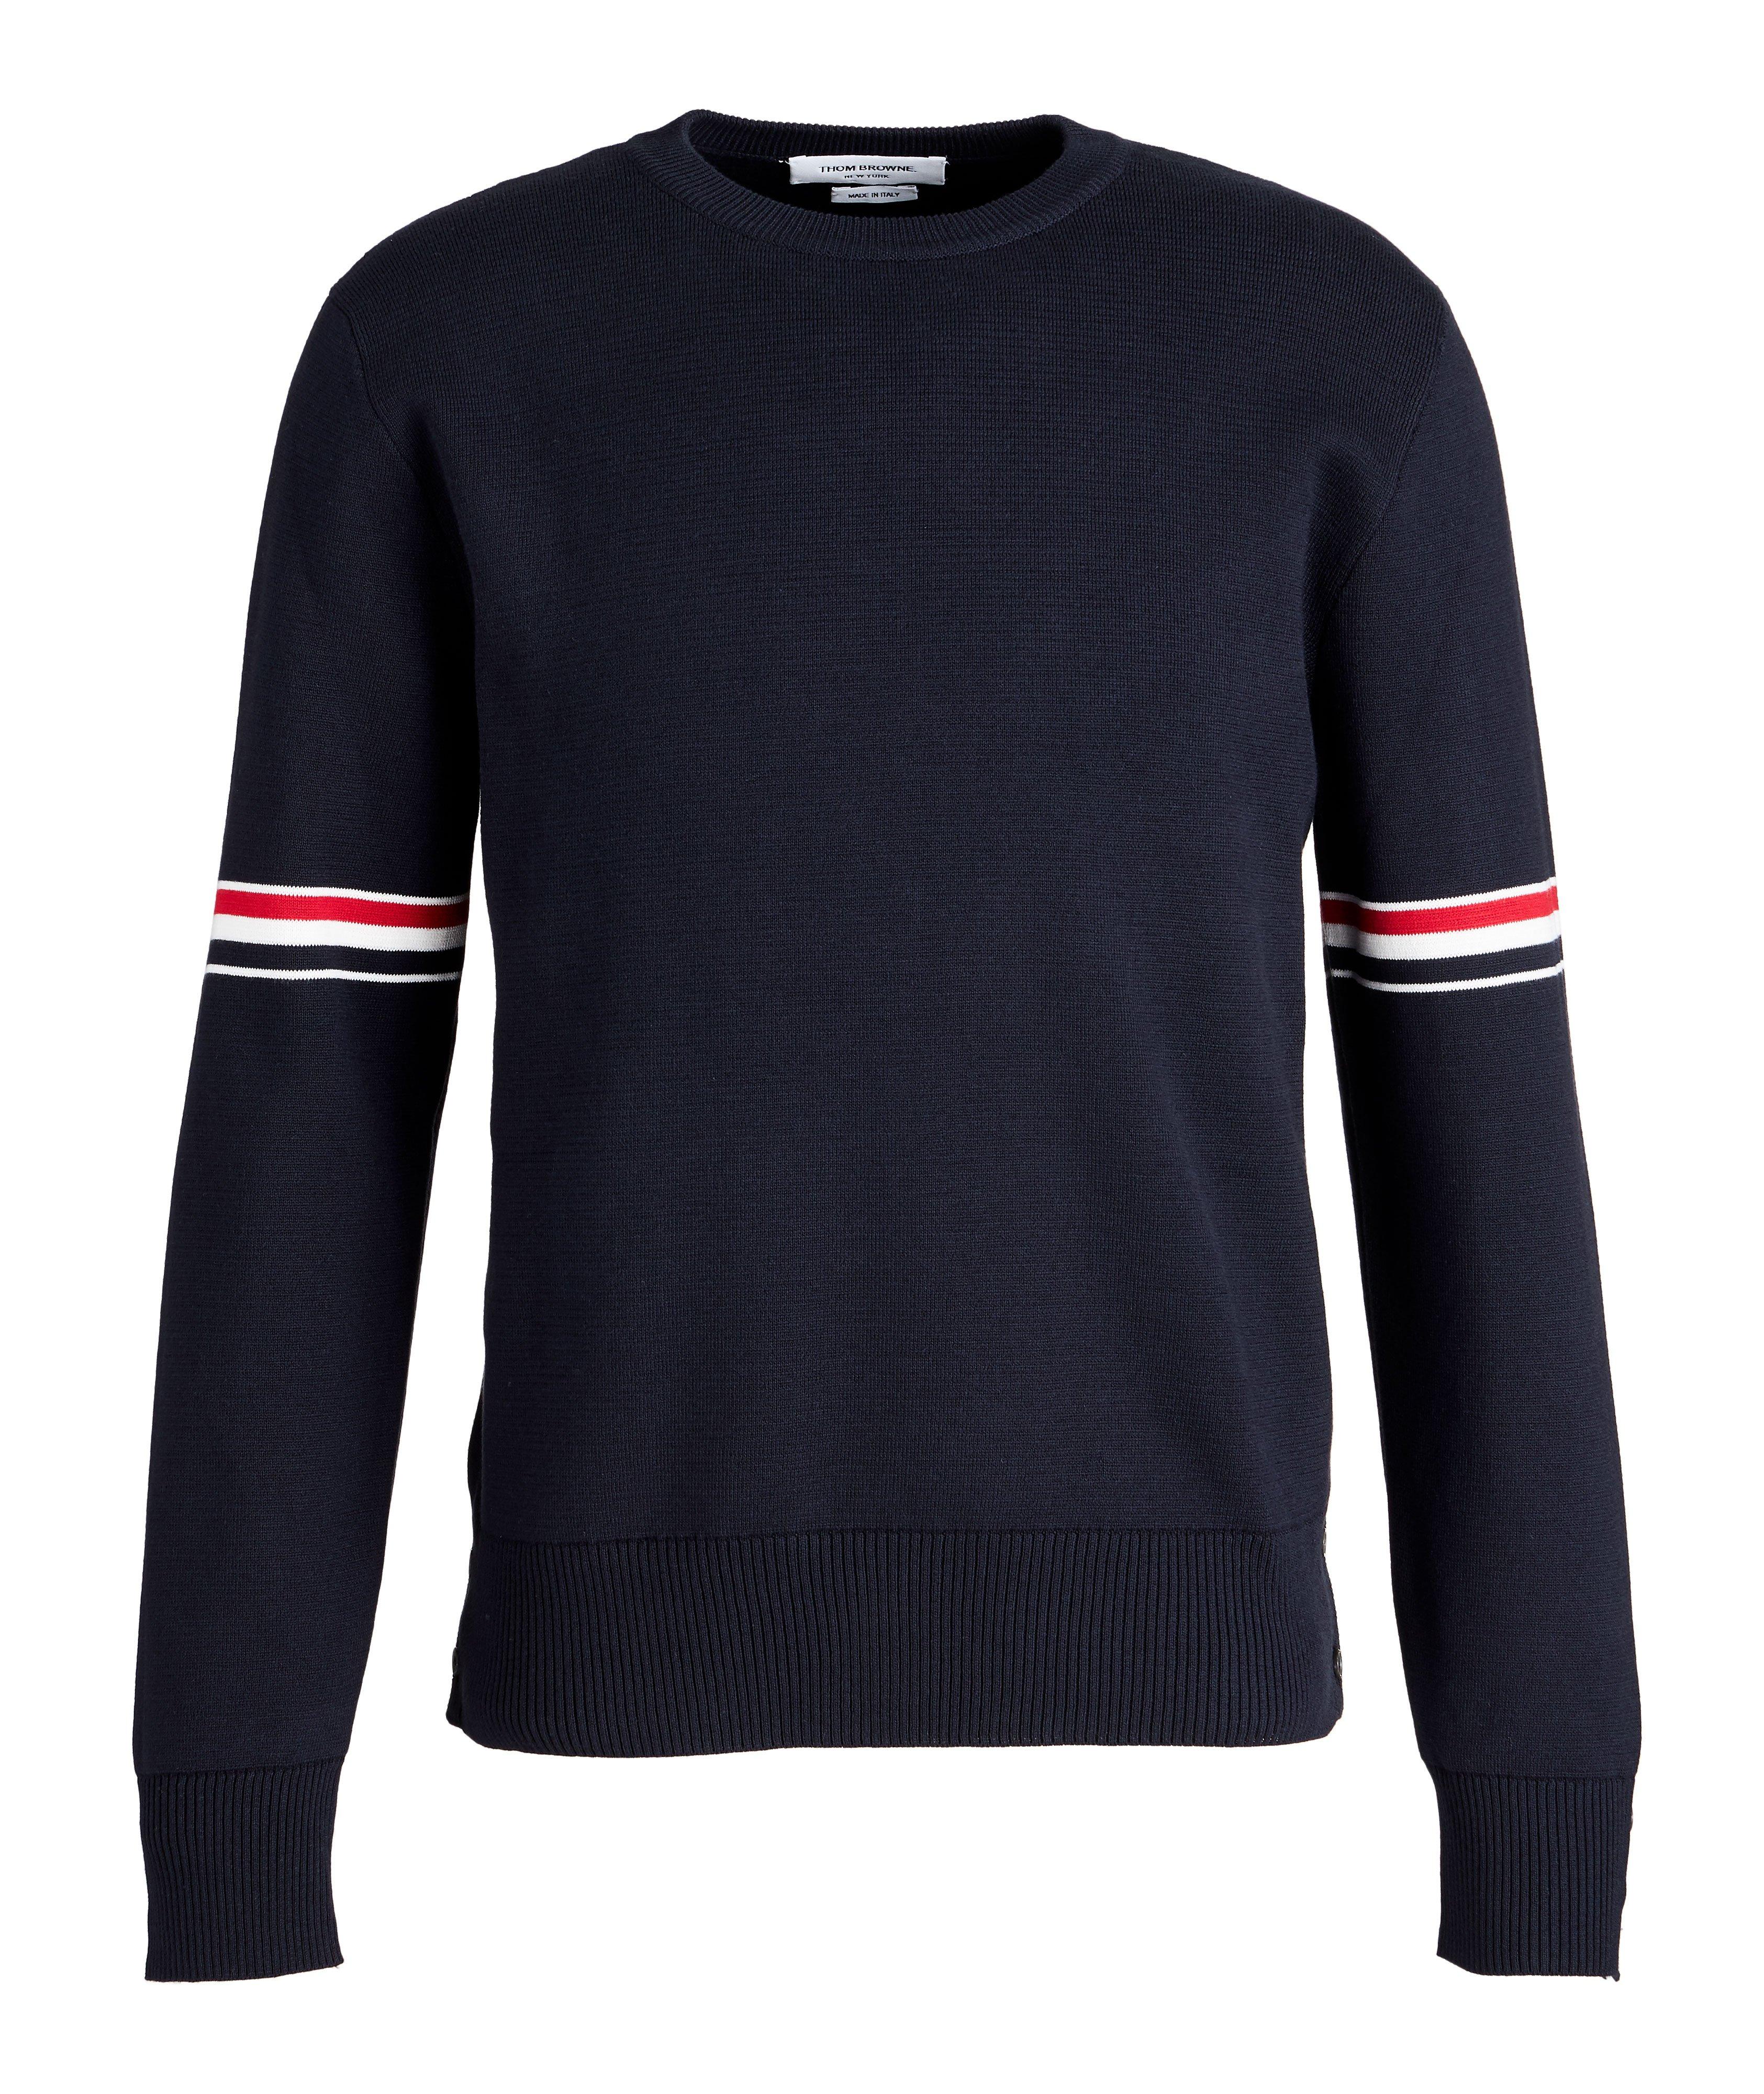 Milano Stitch Cotton Sweater image 0